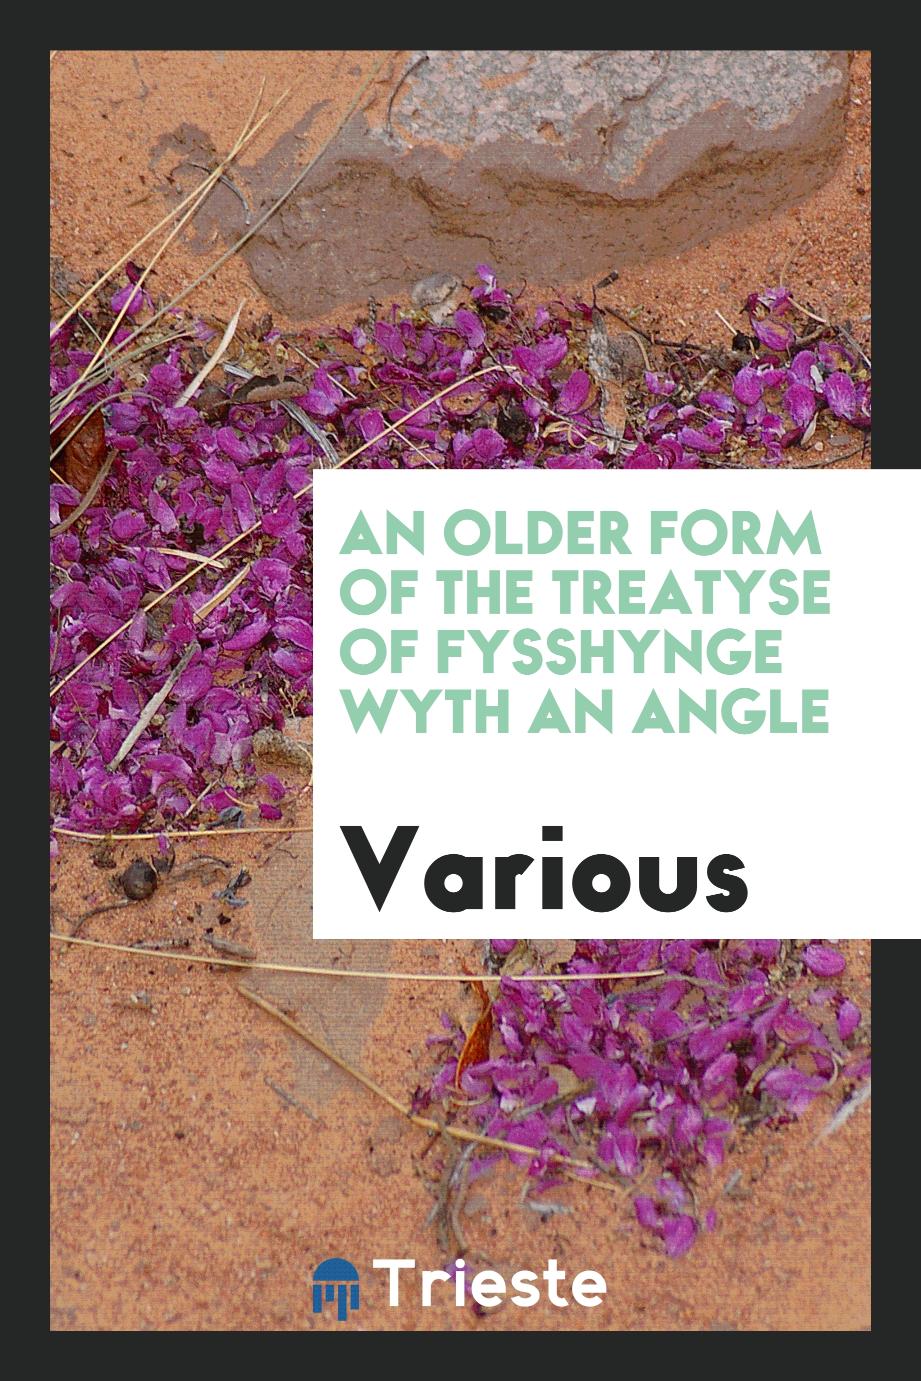 An older form of the Treatyse of Fysshynge wyth an angle